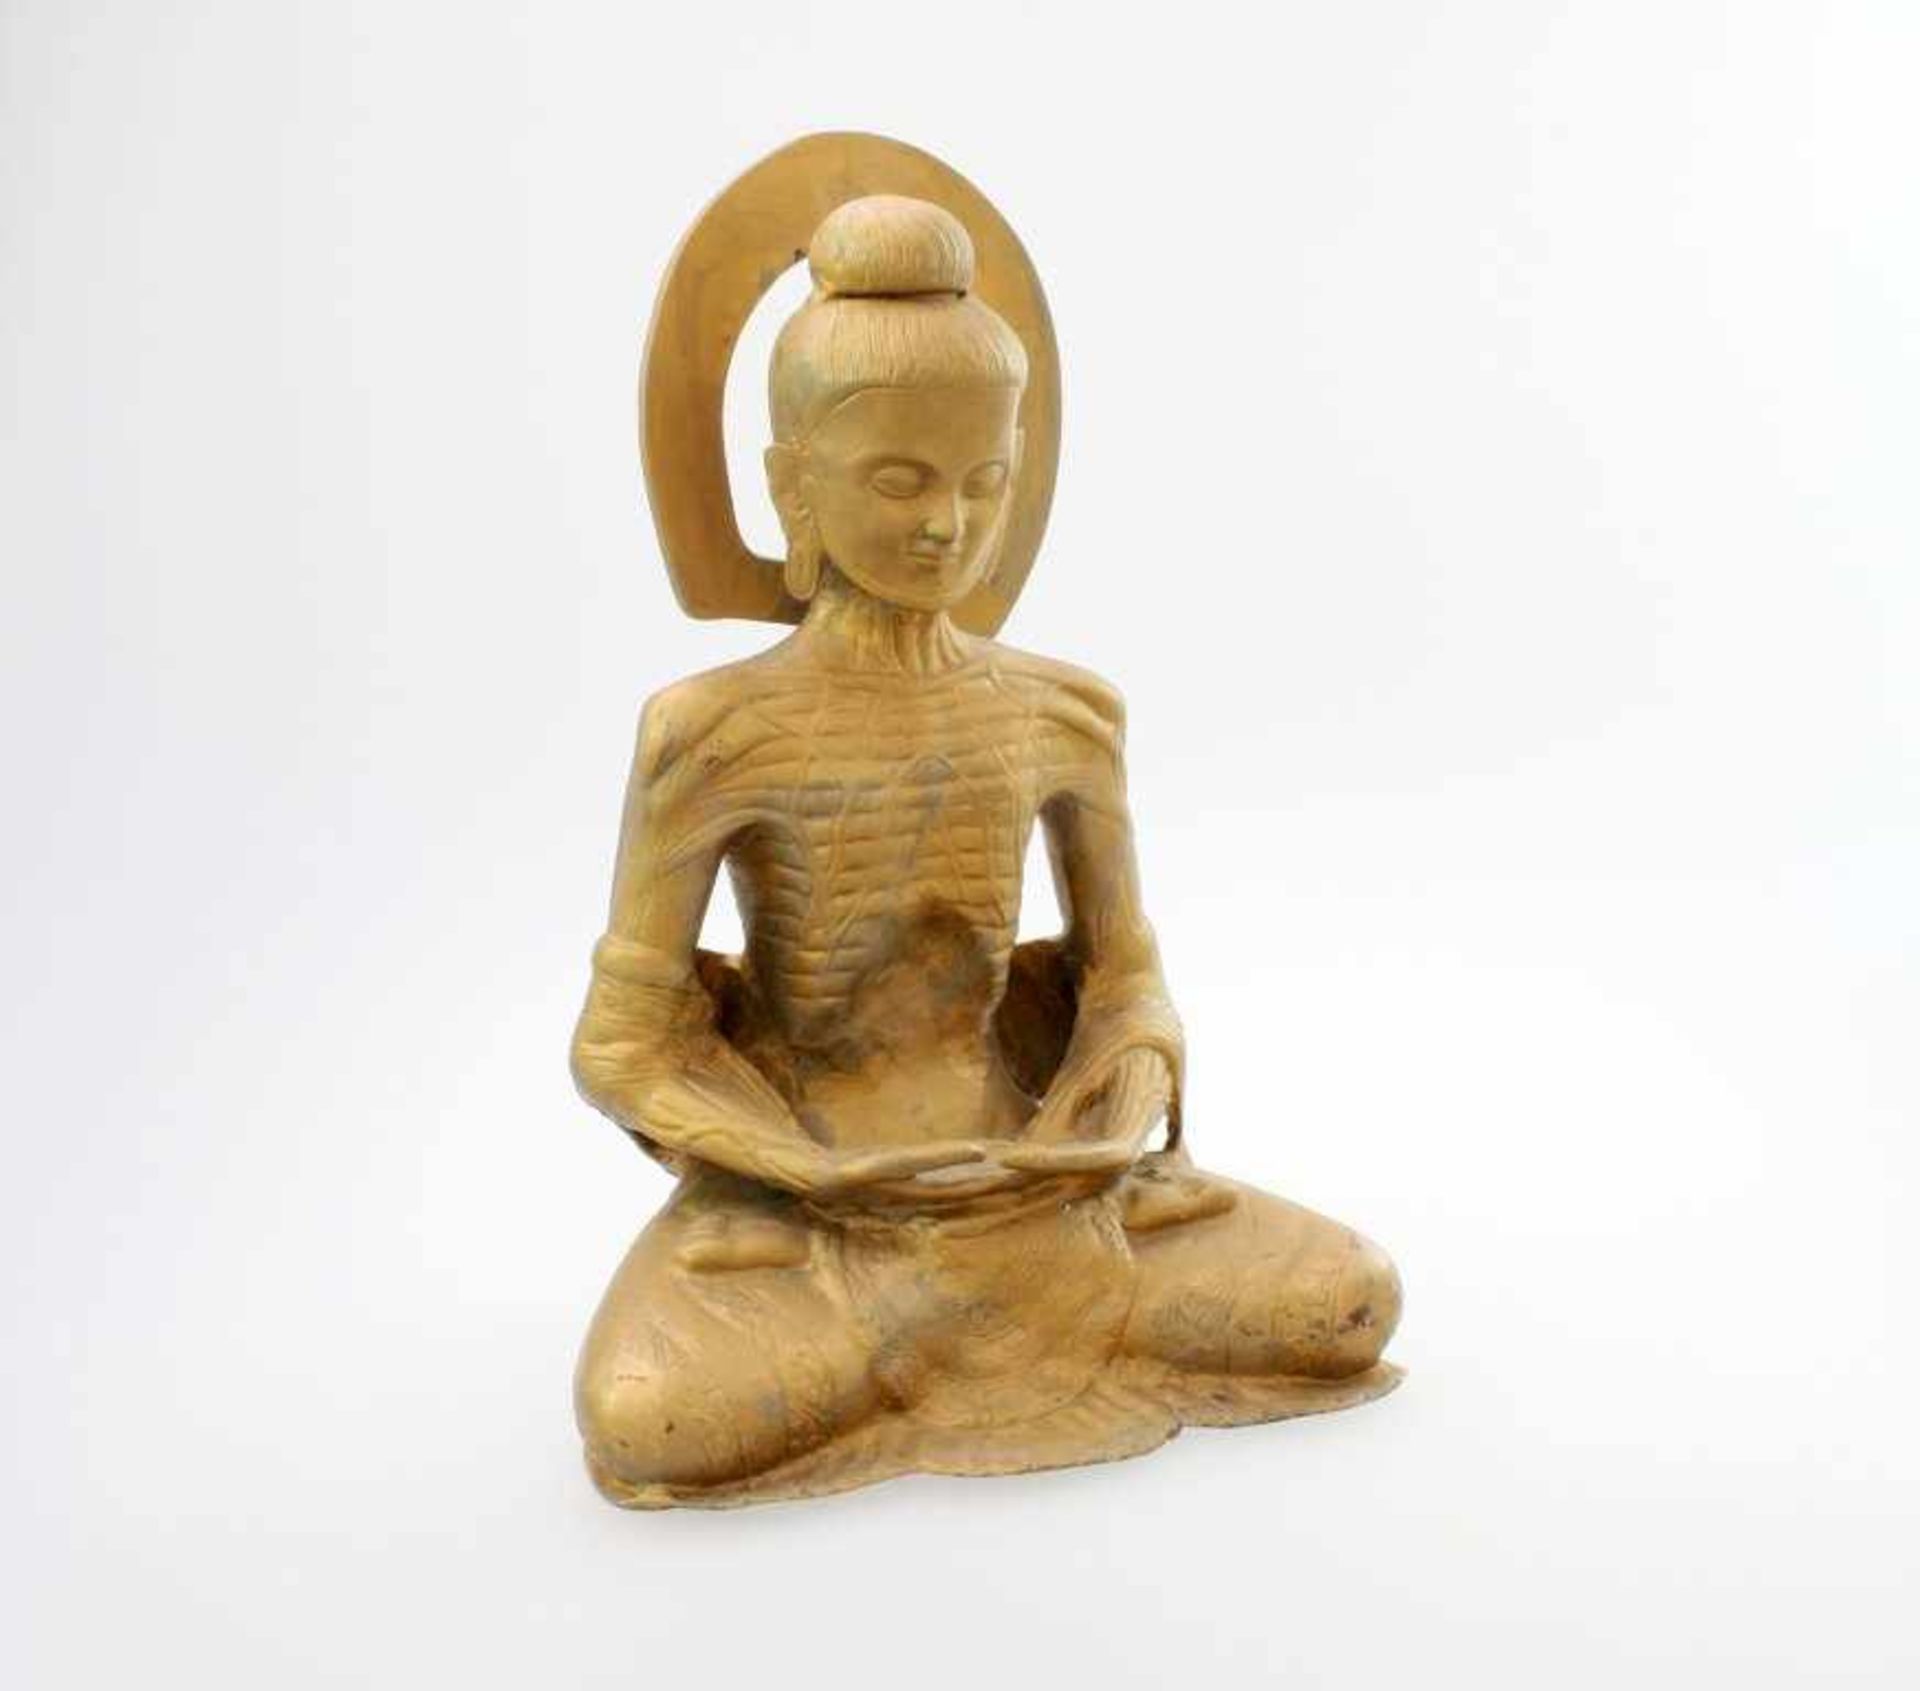 Hunger-Buddha - Indien Figur in Meditation versunken, aufsteckbare Korona, Messingguss. Höhe: 38